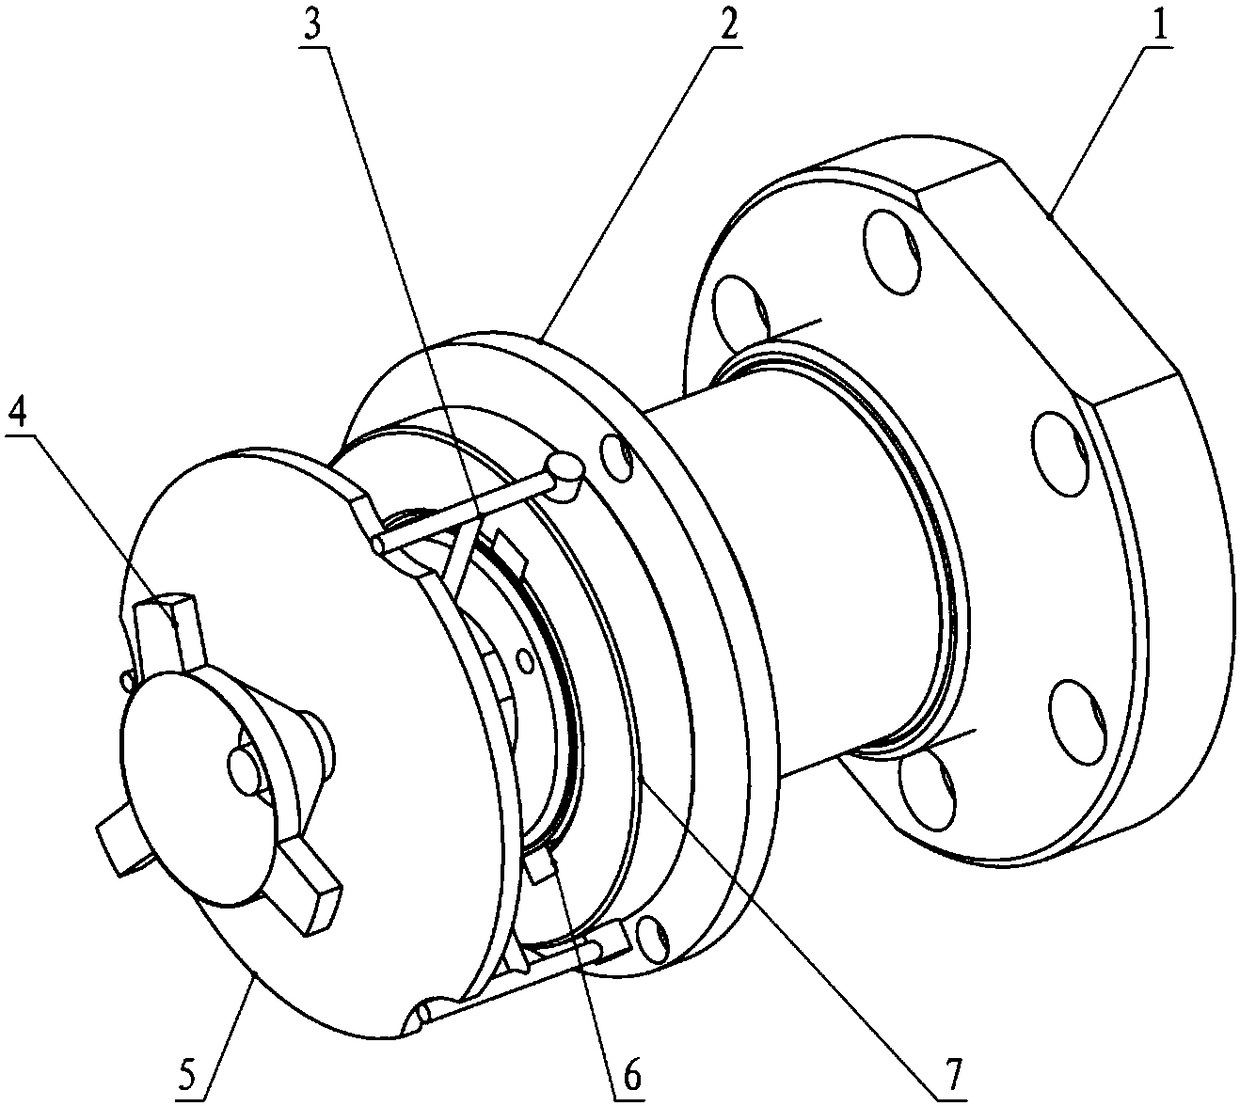 Rotary shaft mechanical locking device based on lever micro-motion principle